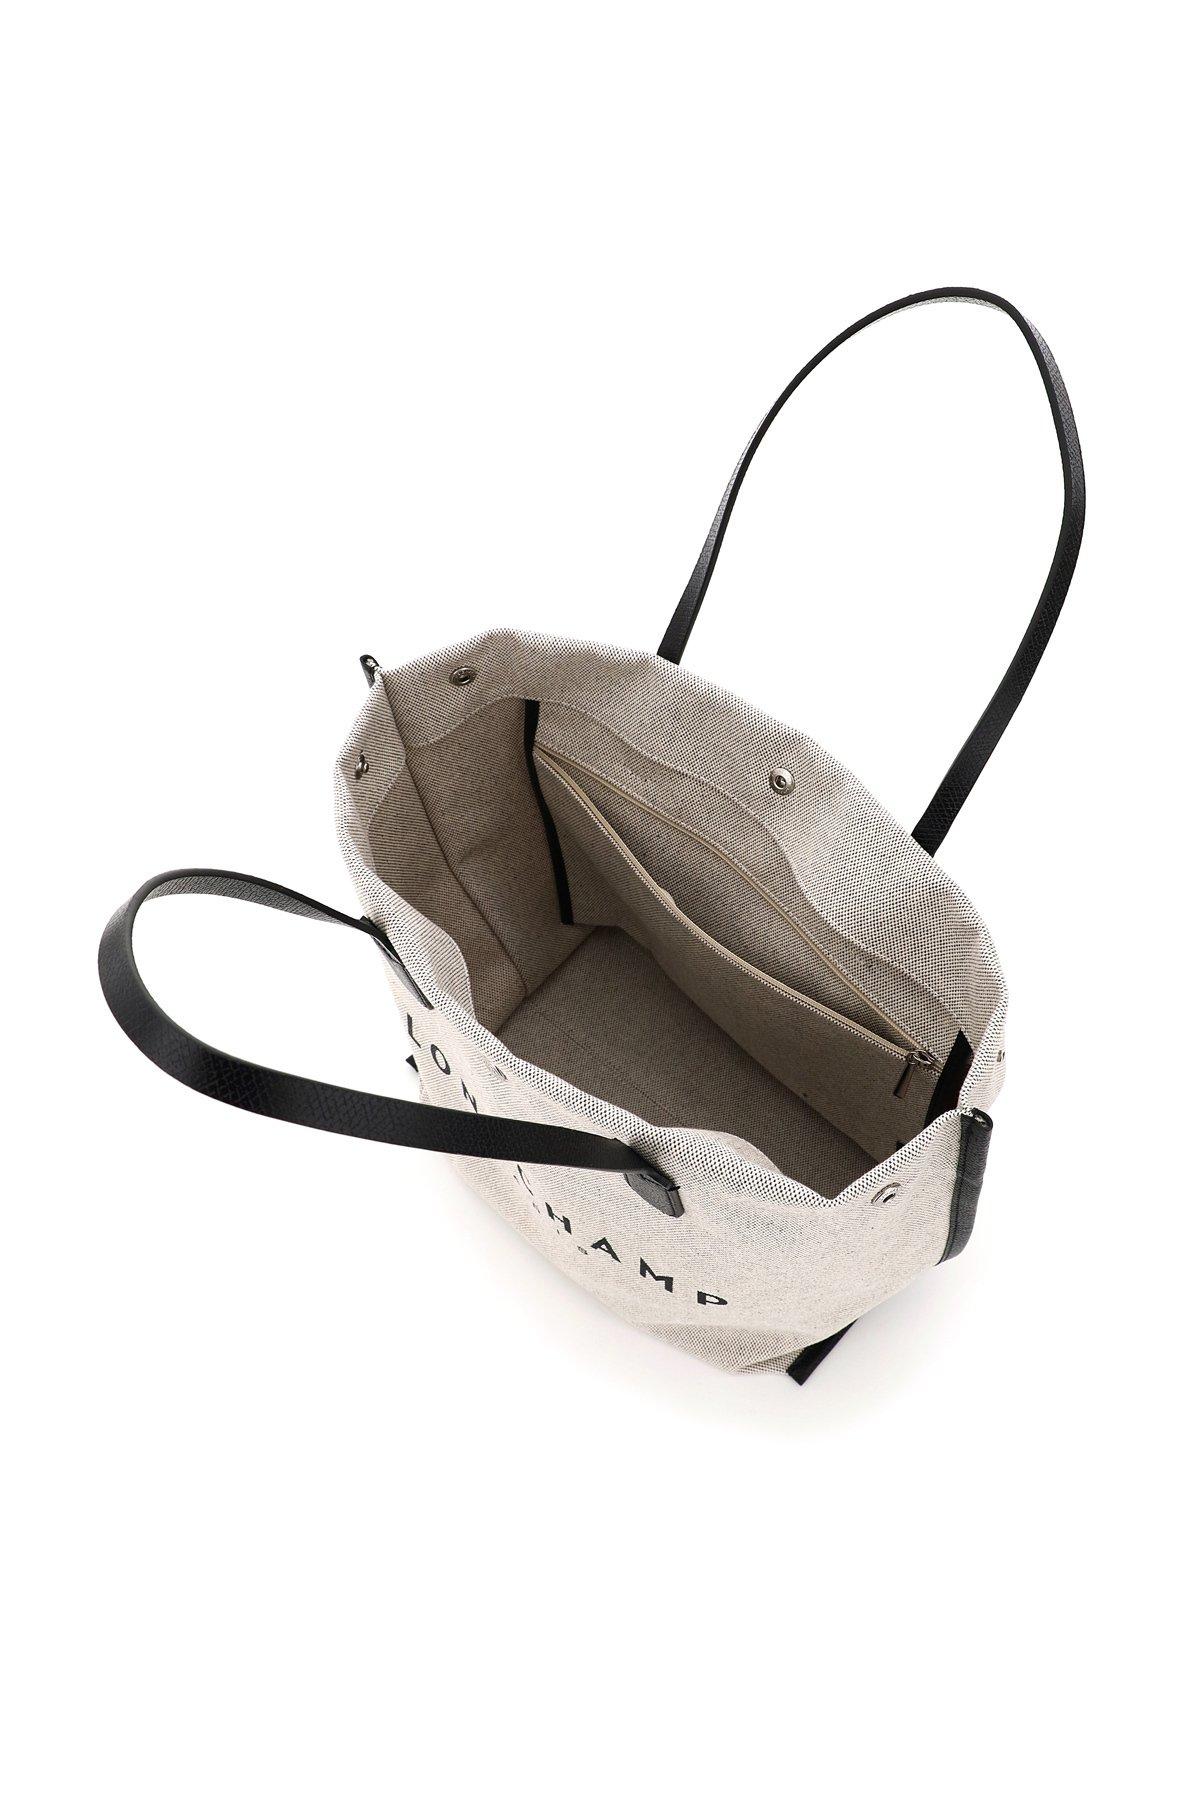 Longchamp Small Roseau Canvas Bucket Bag In Ecru